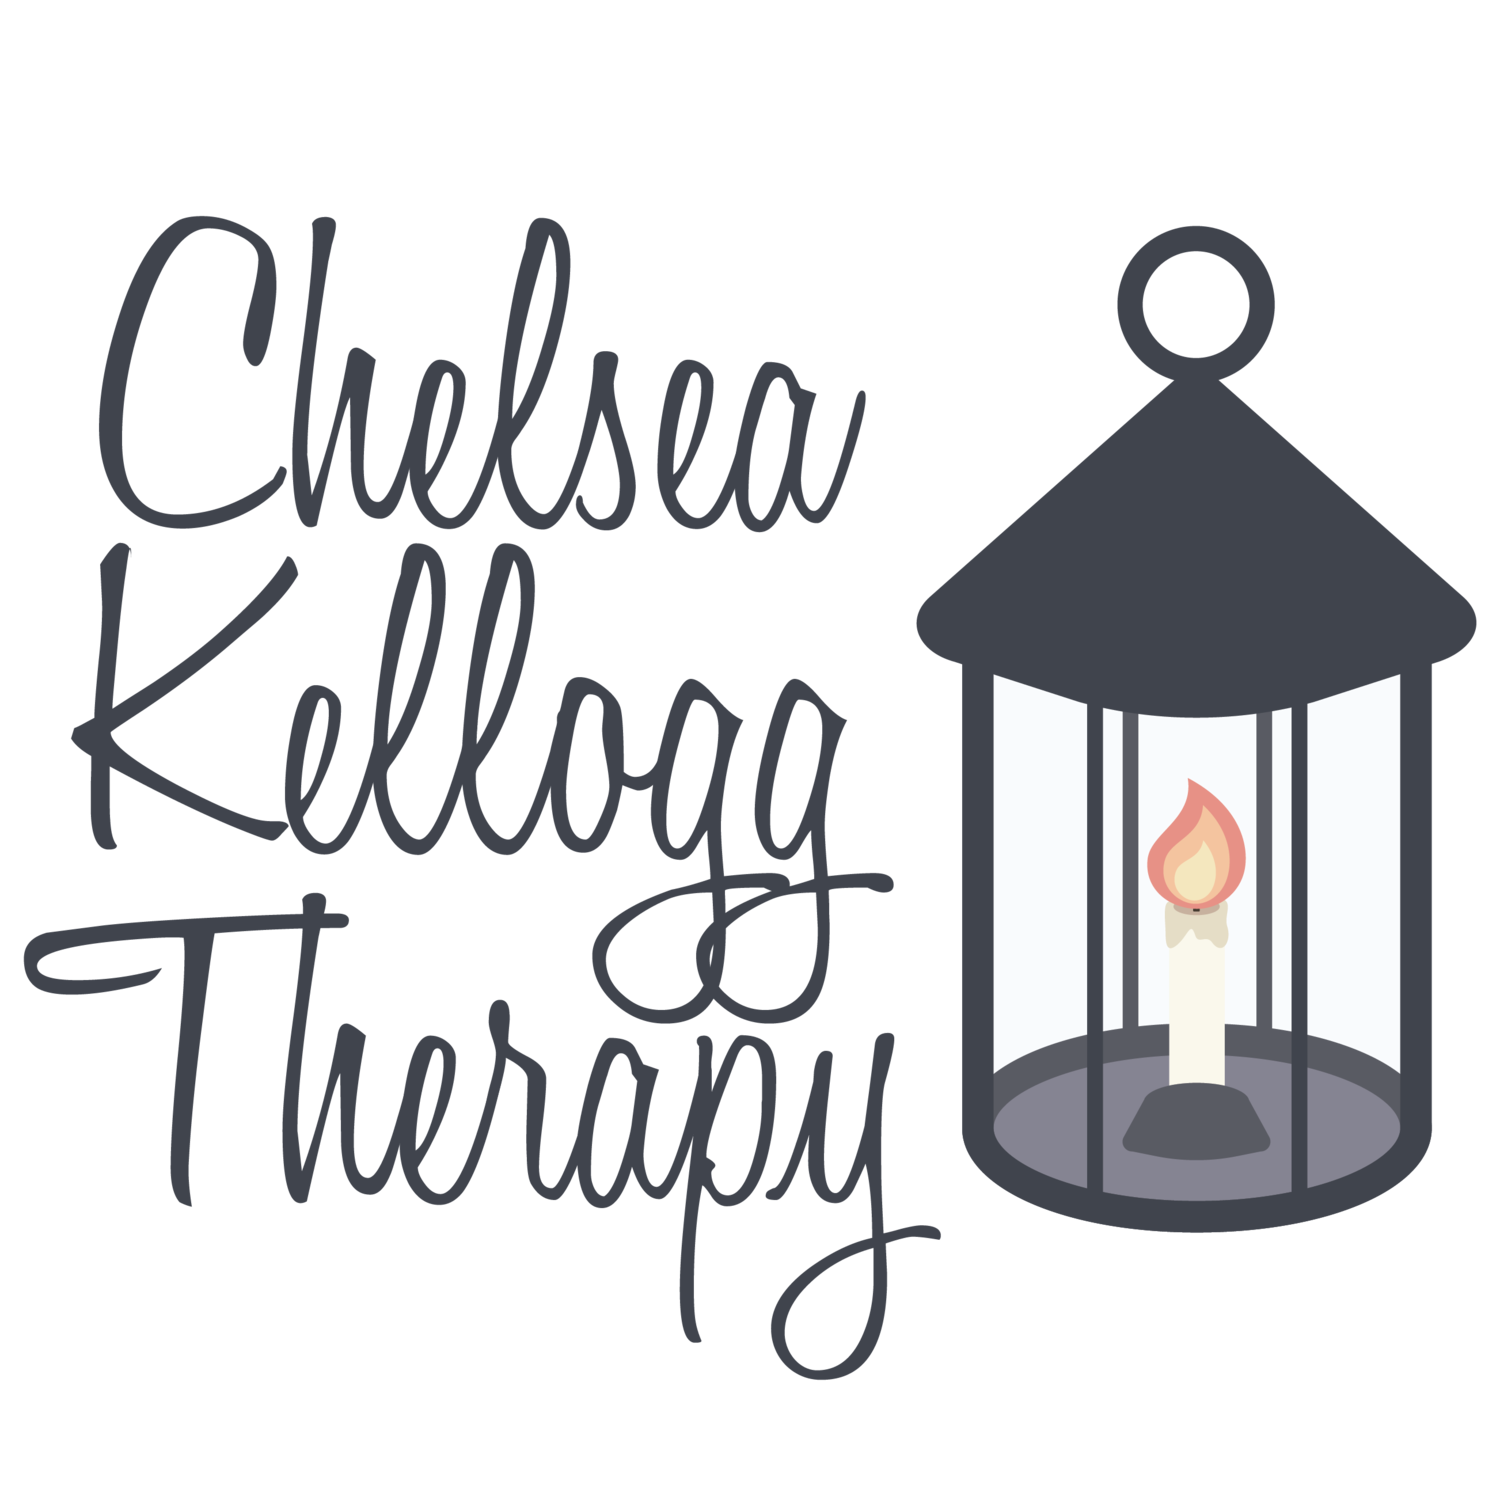 Chelsea Kellogg Therapy